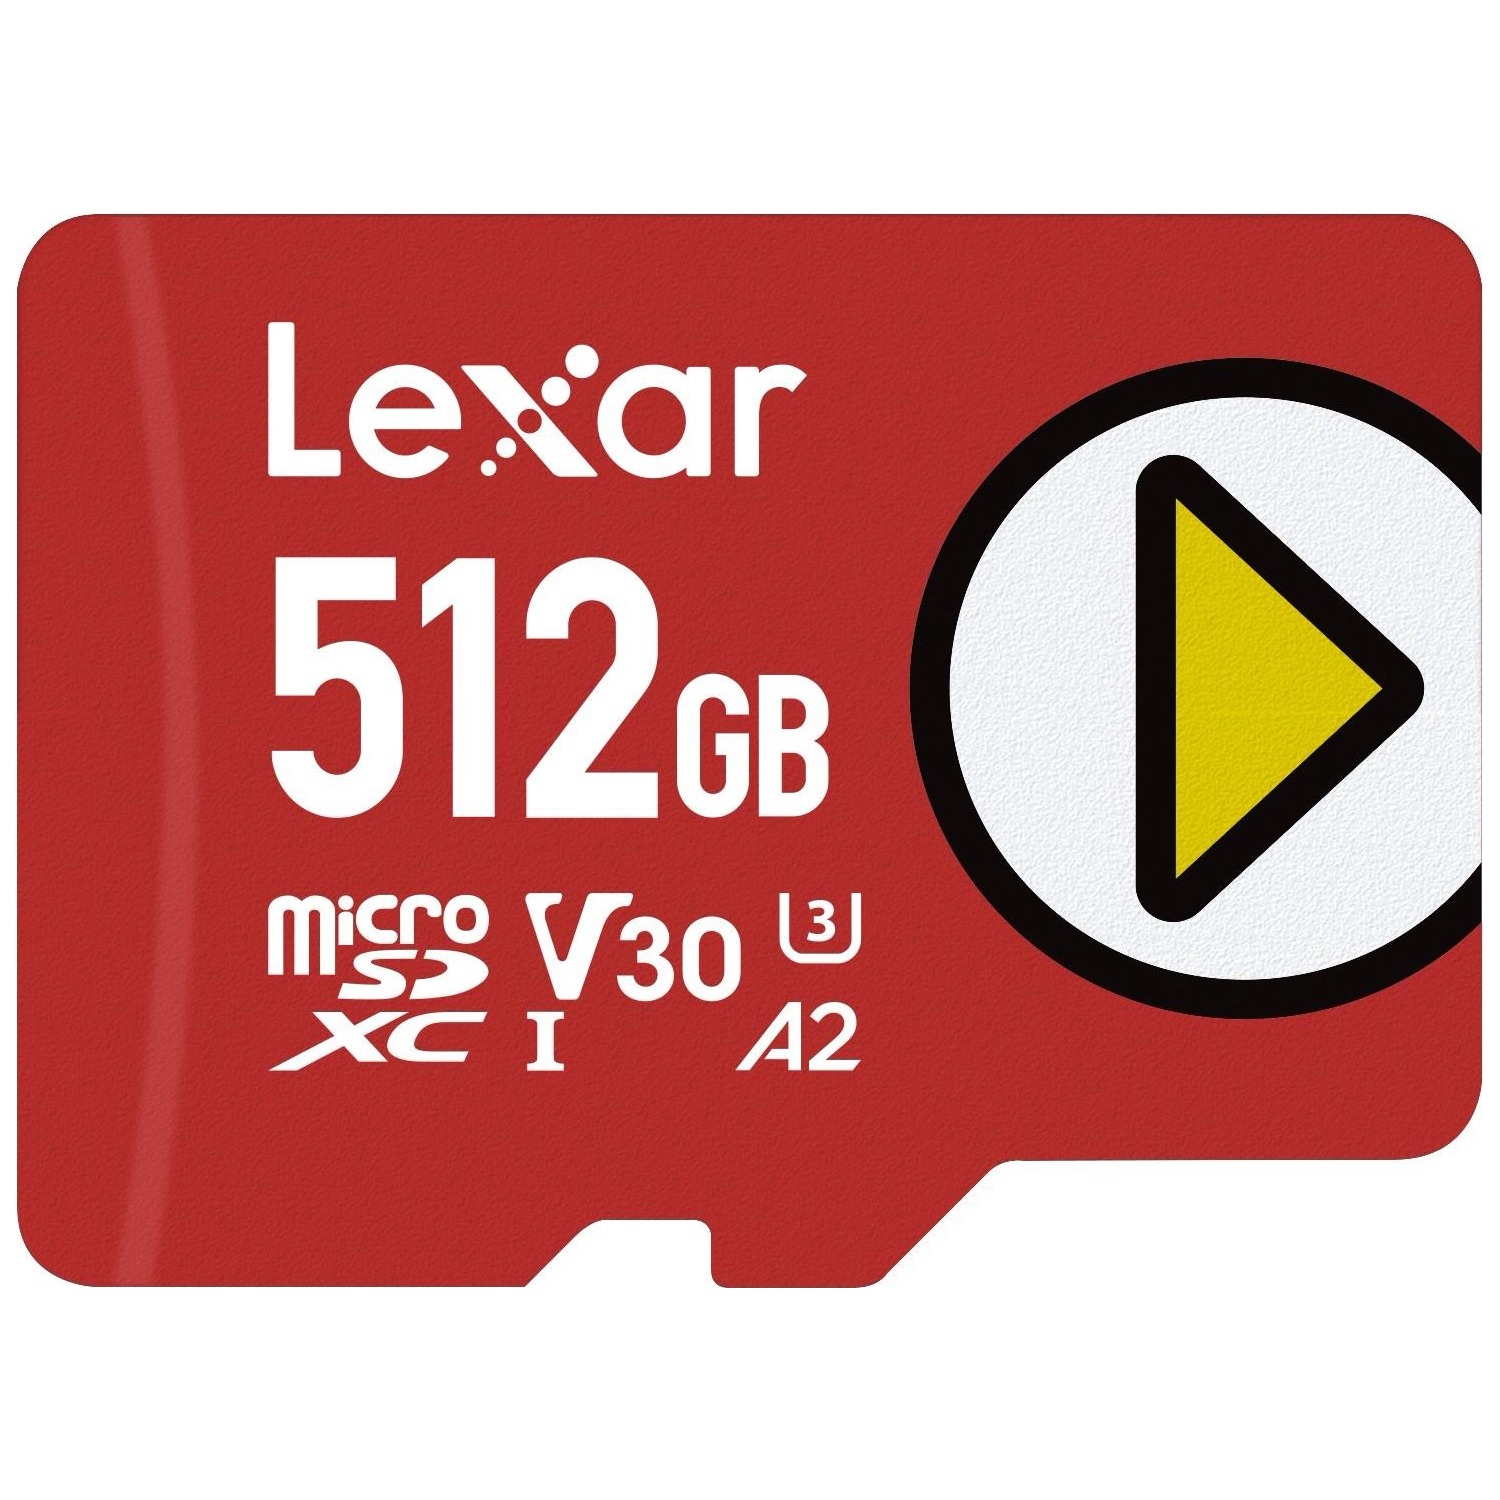 Immagine per MicroSD Lexar PLAY 512GB da DIMOStore